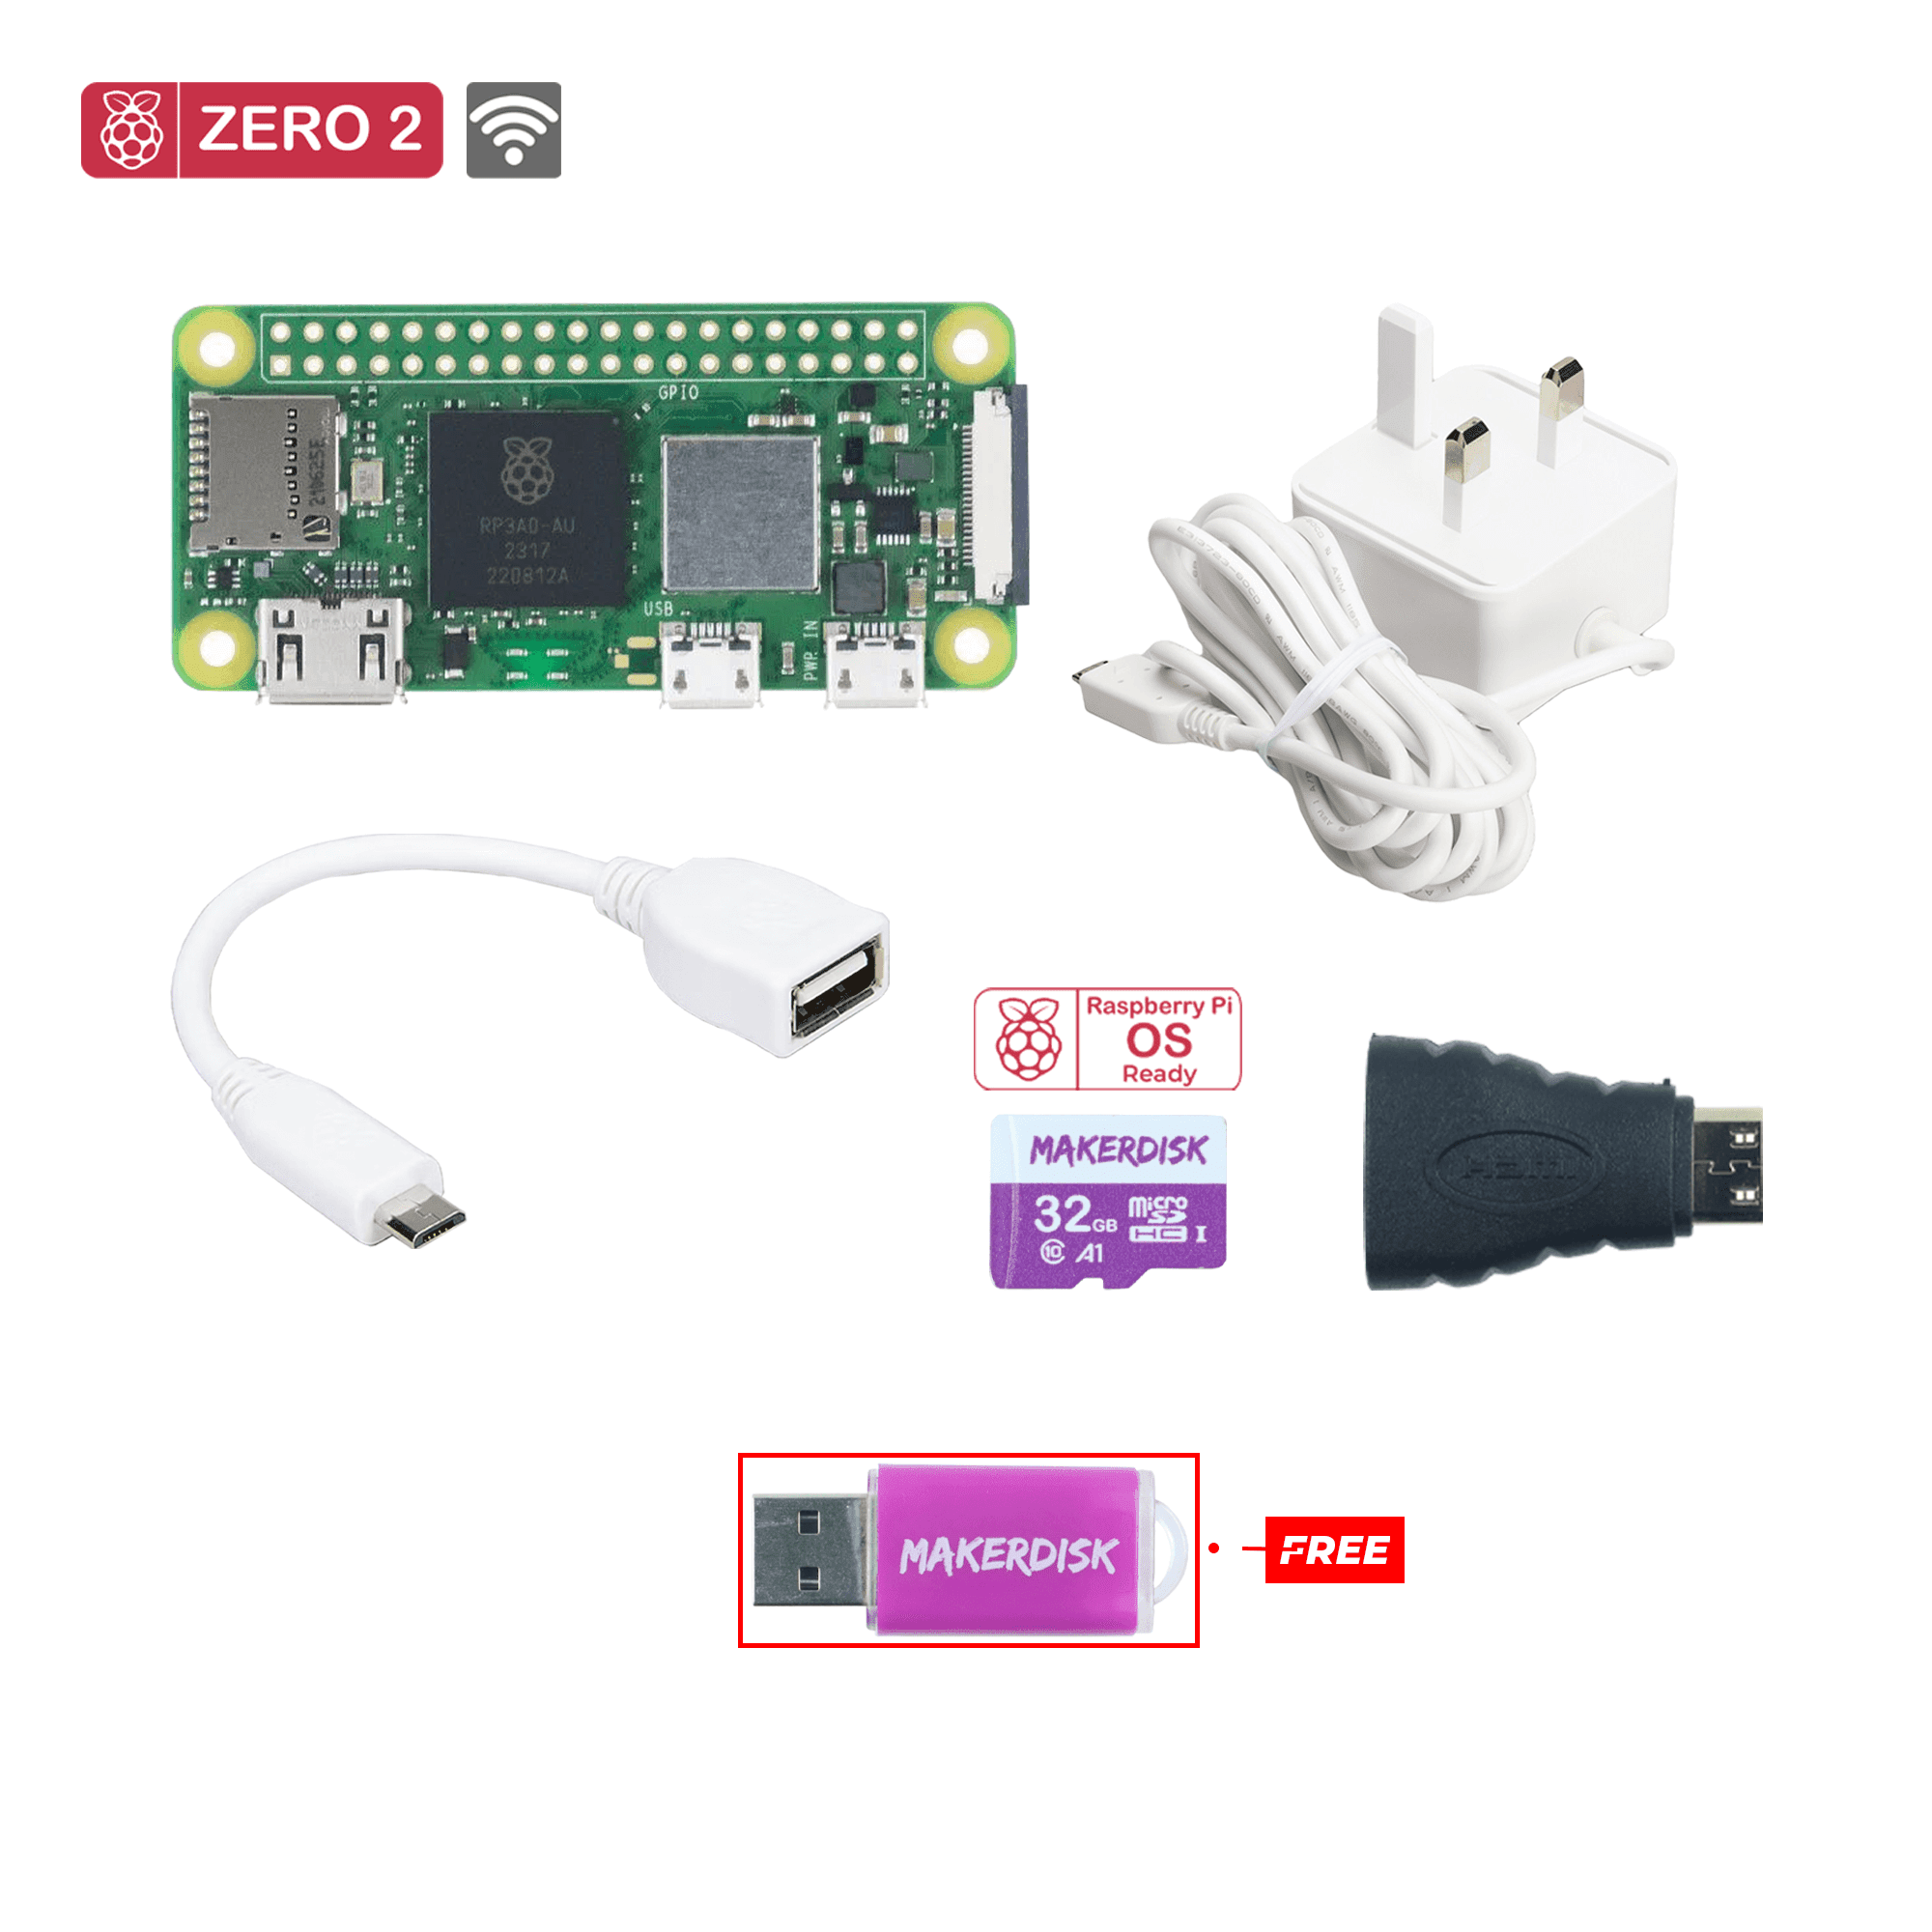 Raspberry Pi Zero 2 W Starter Kit